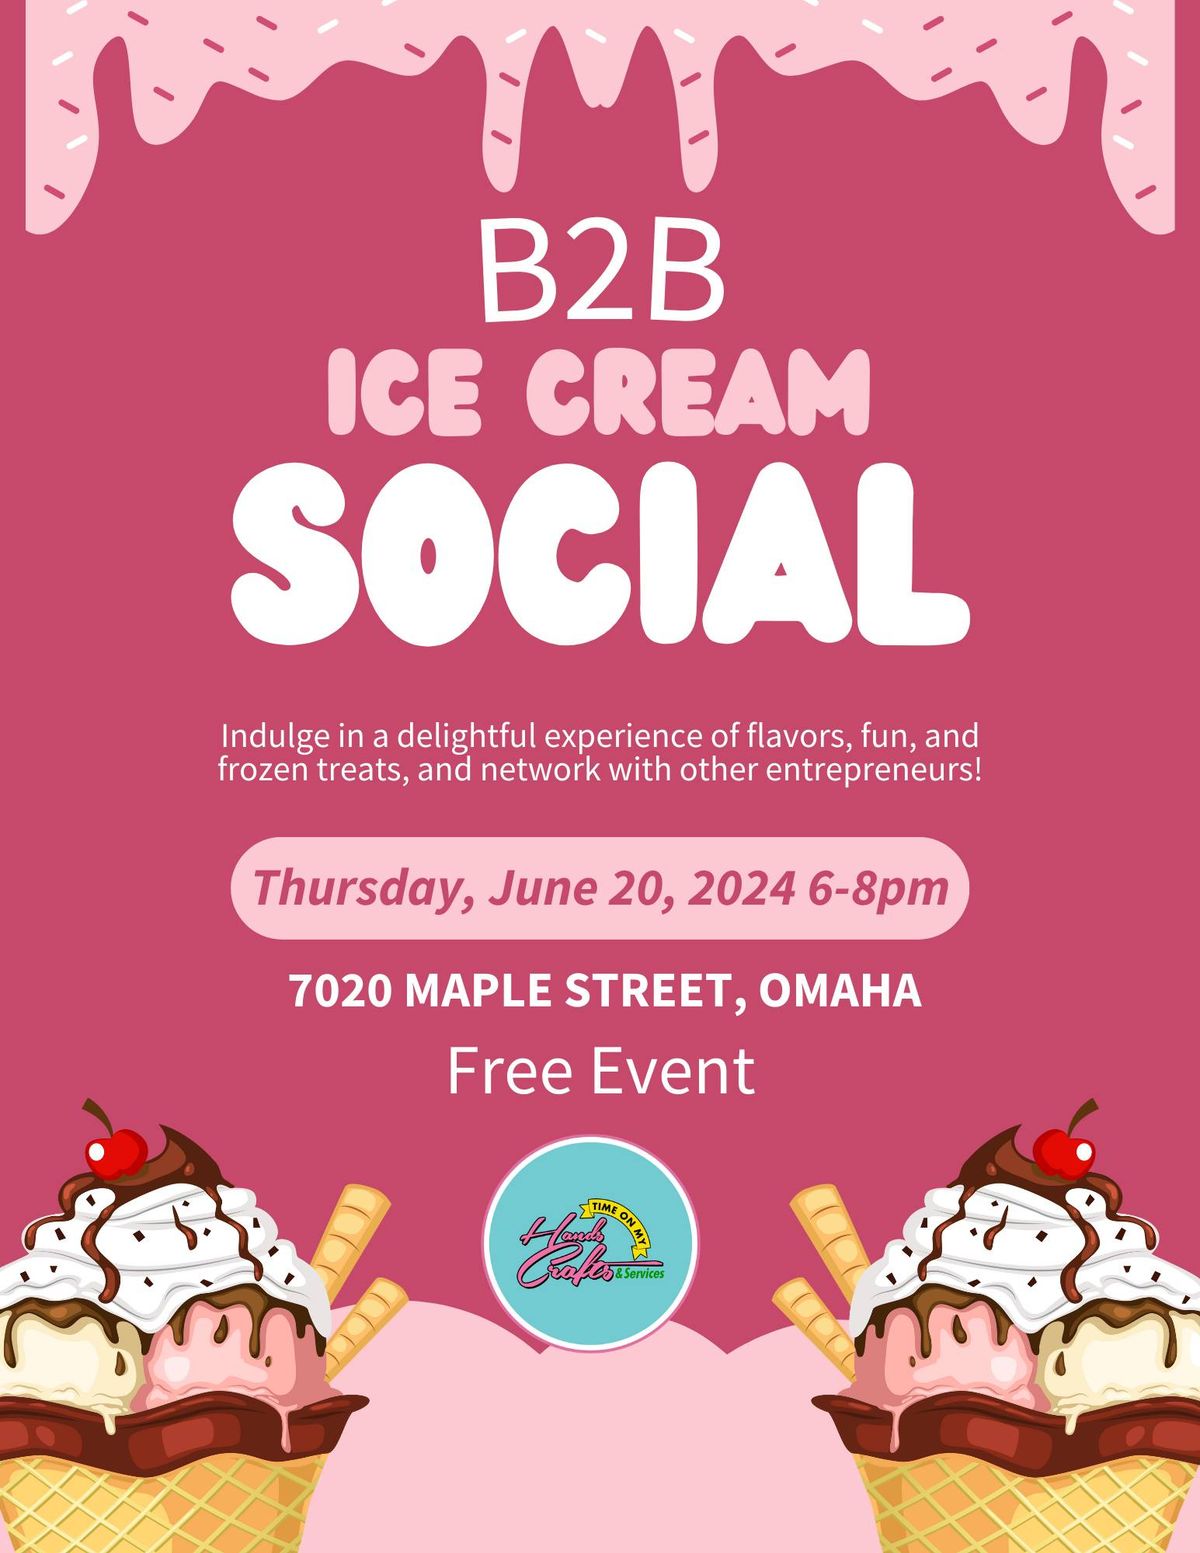 B2B Ice Cream Social Networking for Entrepreneurs - Free Event